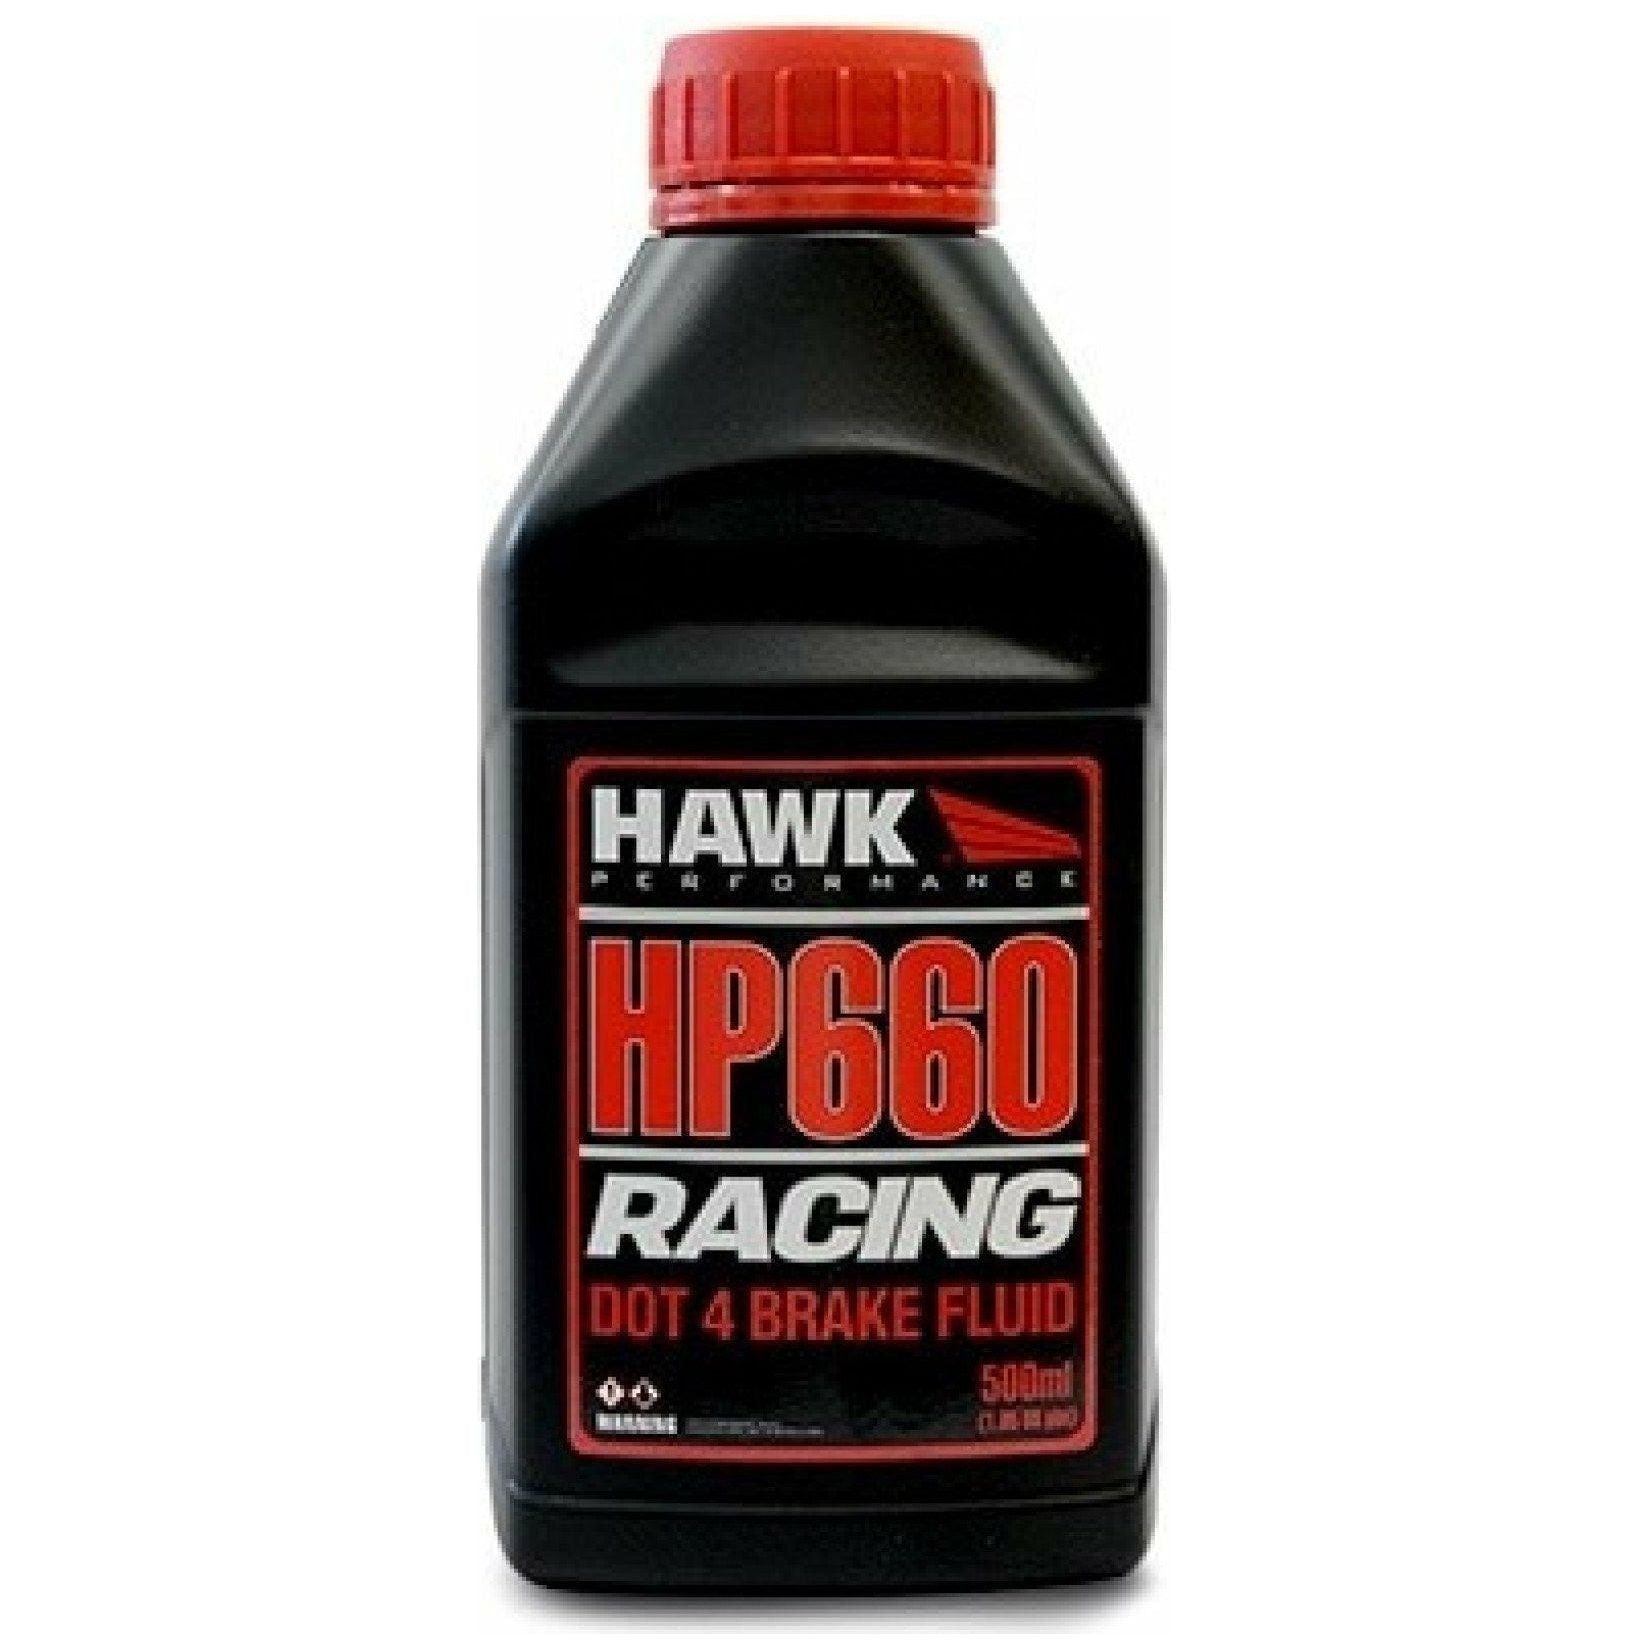 Hawk Performance Race DOT 4 Brake Fluid - 500ml Bottle - SMINKpower Performance Parts HAWKHP660 Hawk Performance